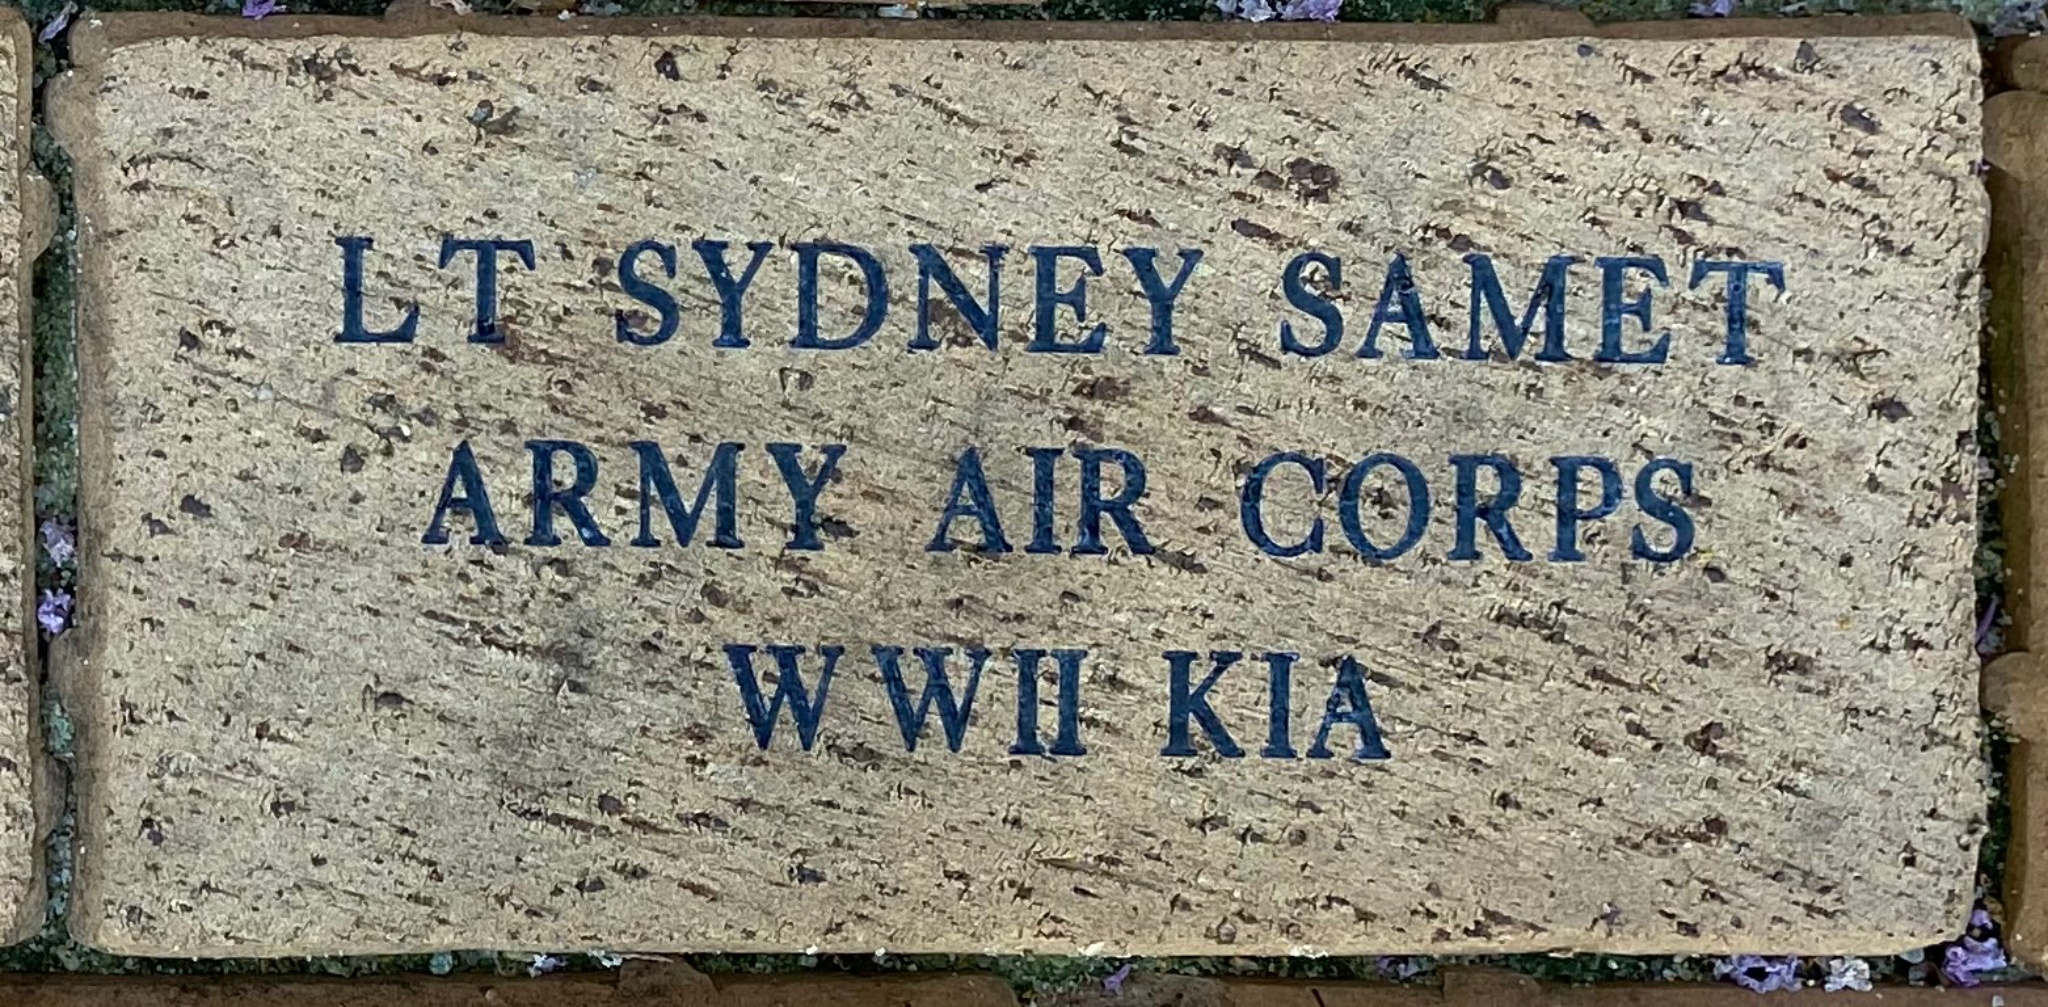 LT SYDNEY SAMET ARMY AIR CORPS WWII KIA